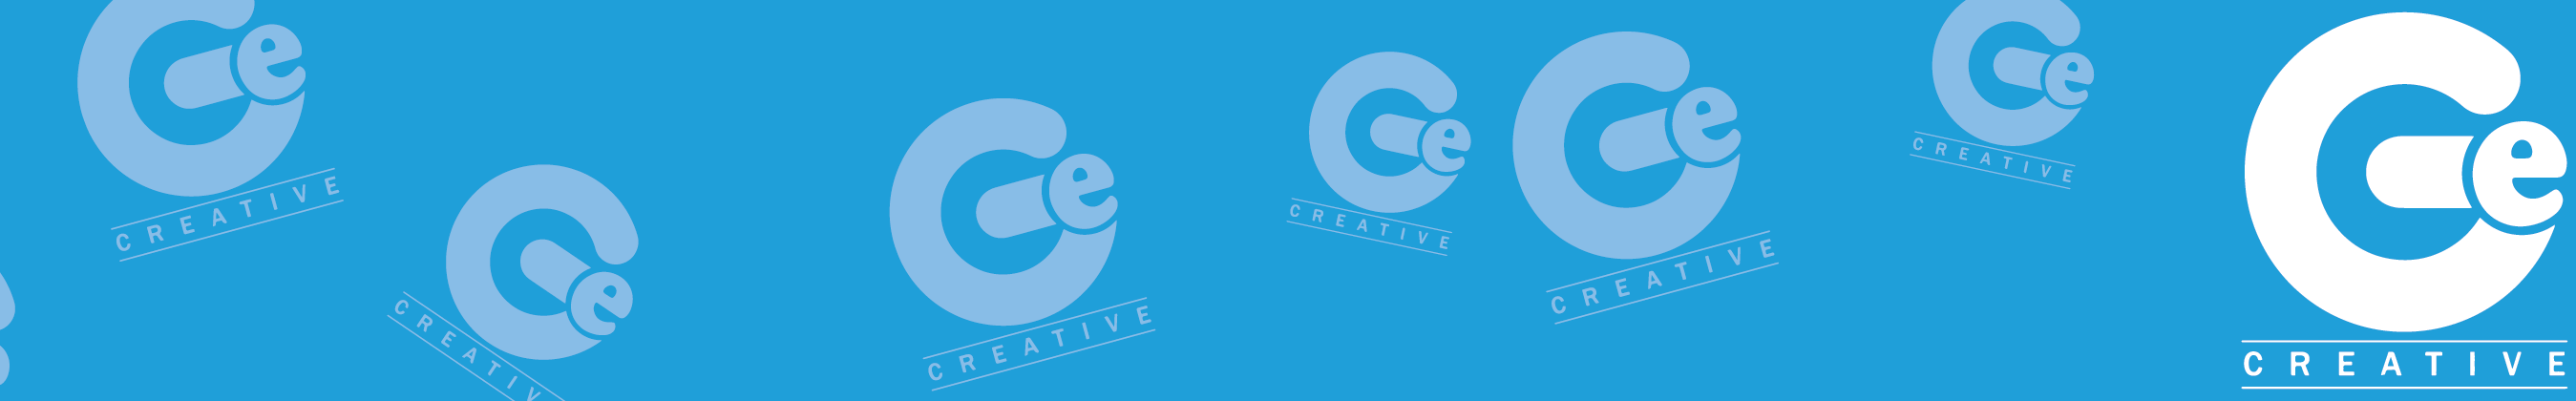 Ge Creative's profile banner